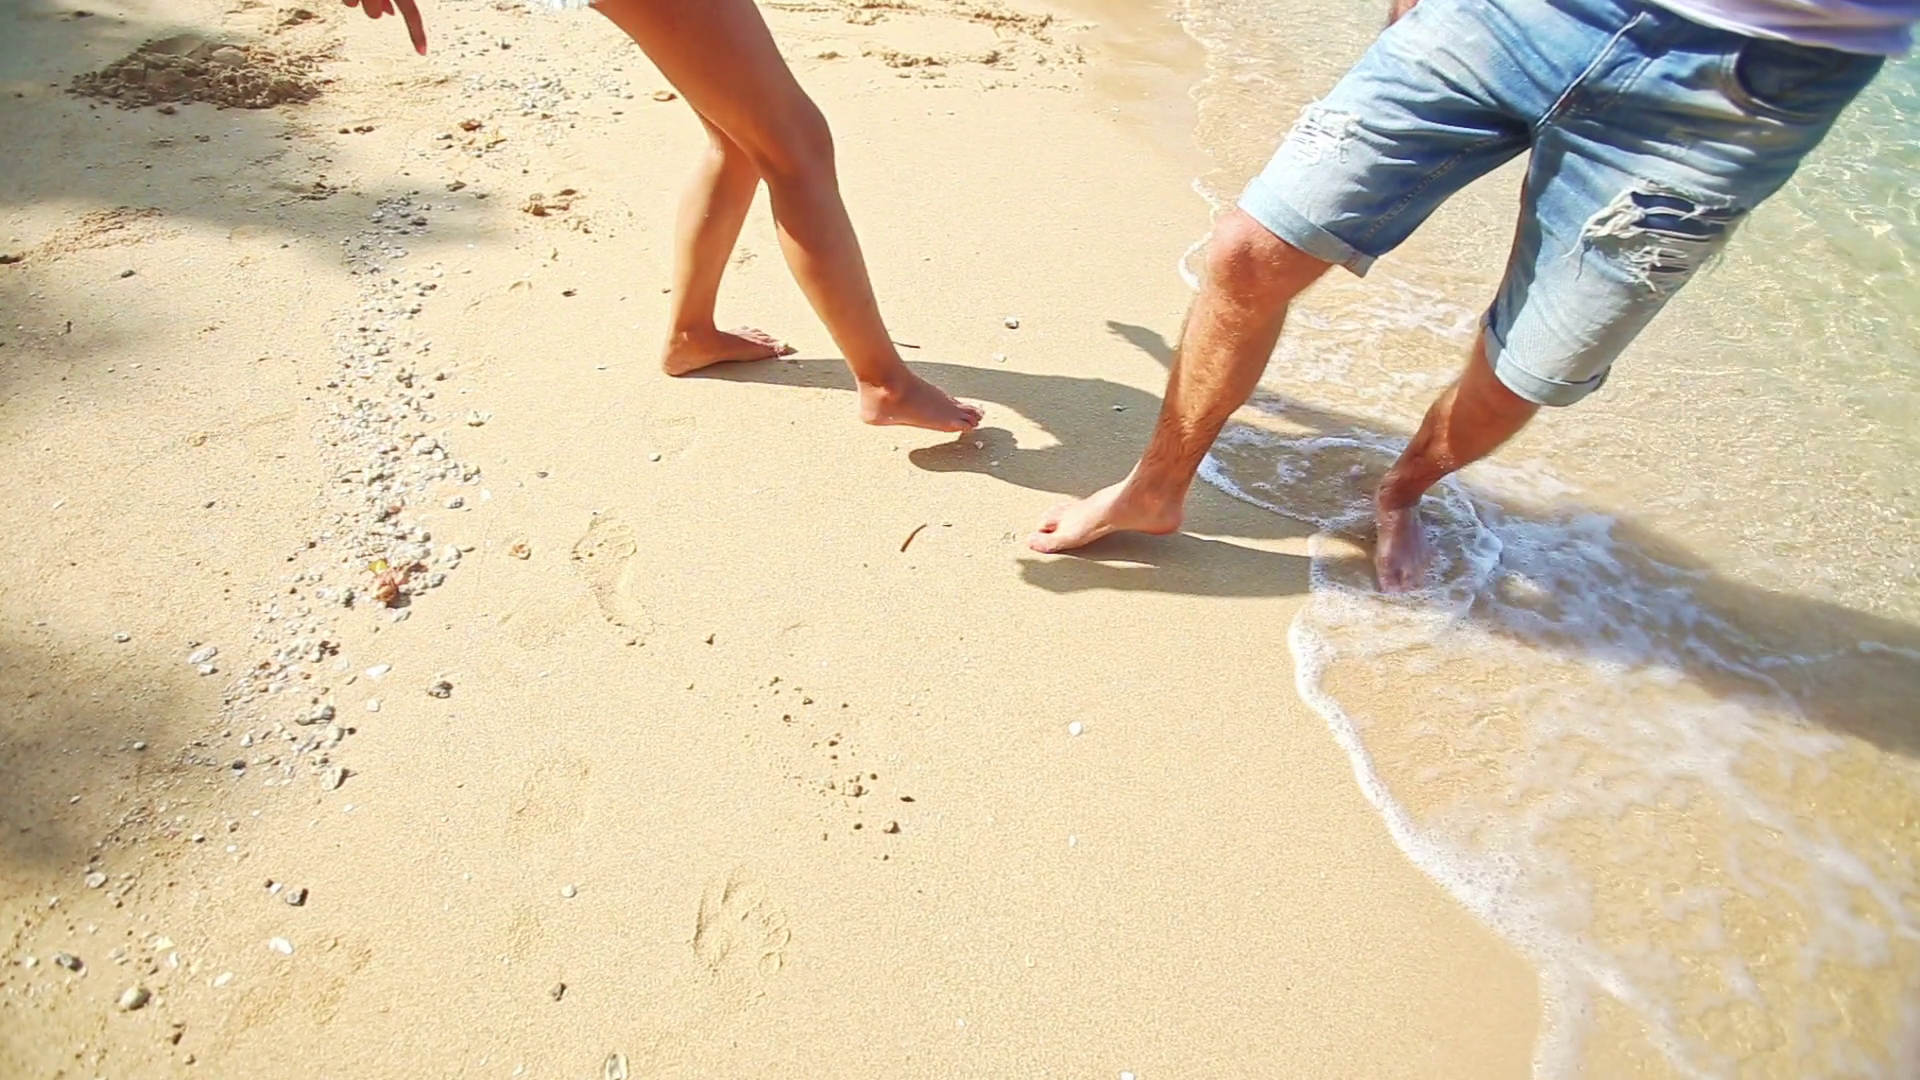 Girl Guy Feet Barefoot Draw Heart on Sand Beach at Wave Edge Stock ...